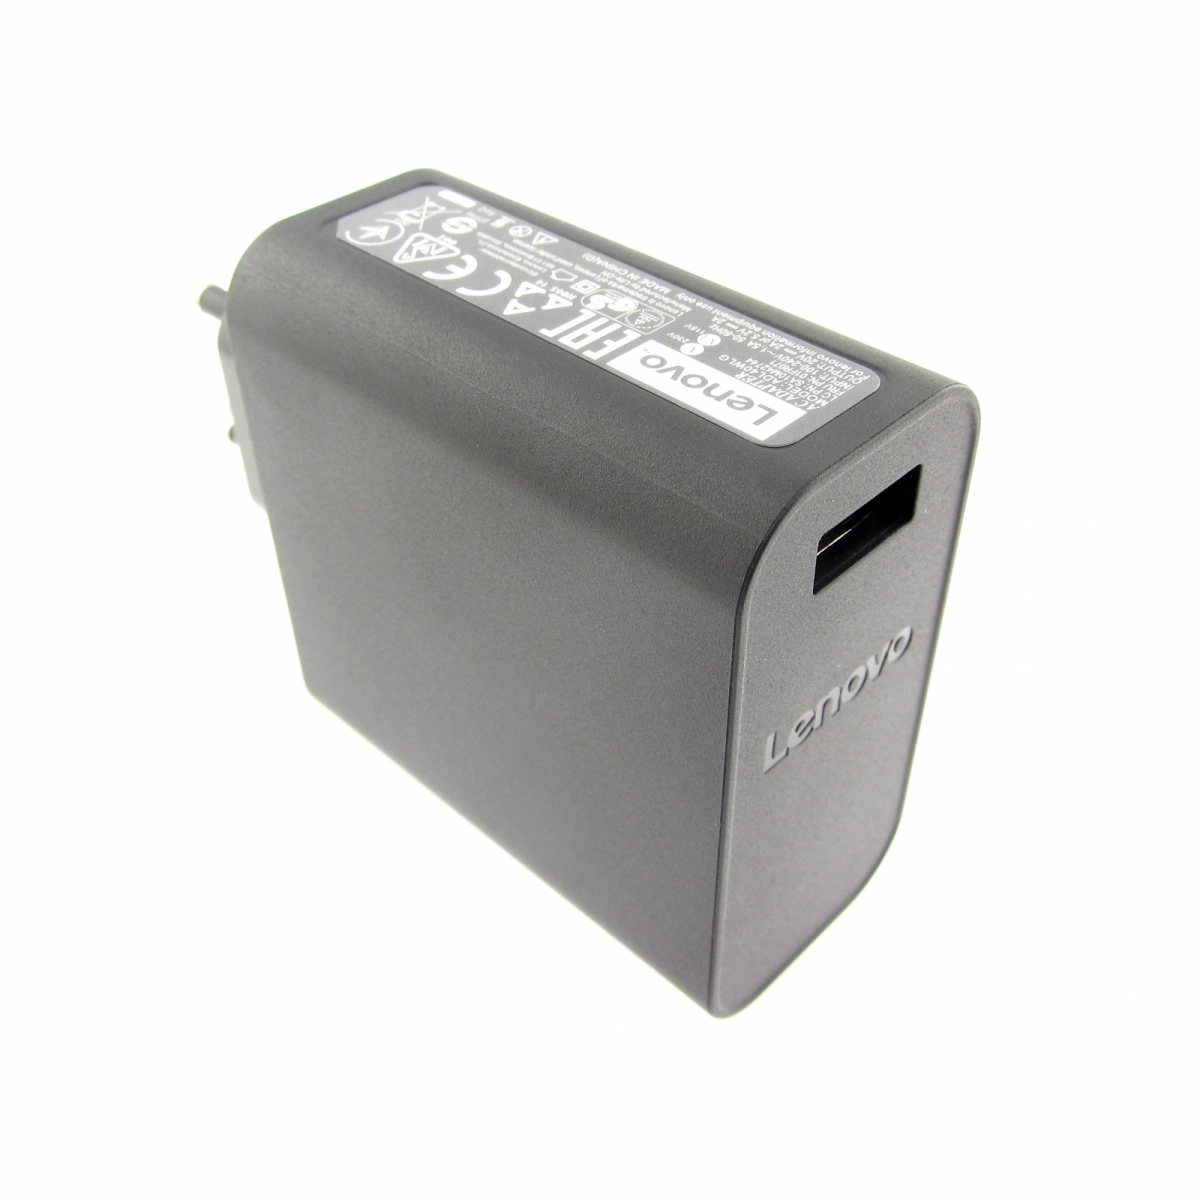 Original Netzteil für LENOVO ADL40WCG 36200585, 20V, 2A, Stecker USB, ohne USB-Kabel